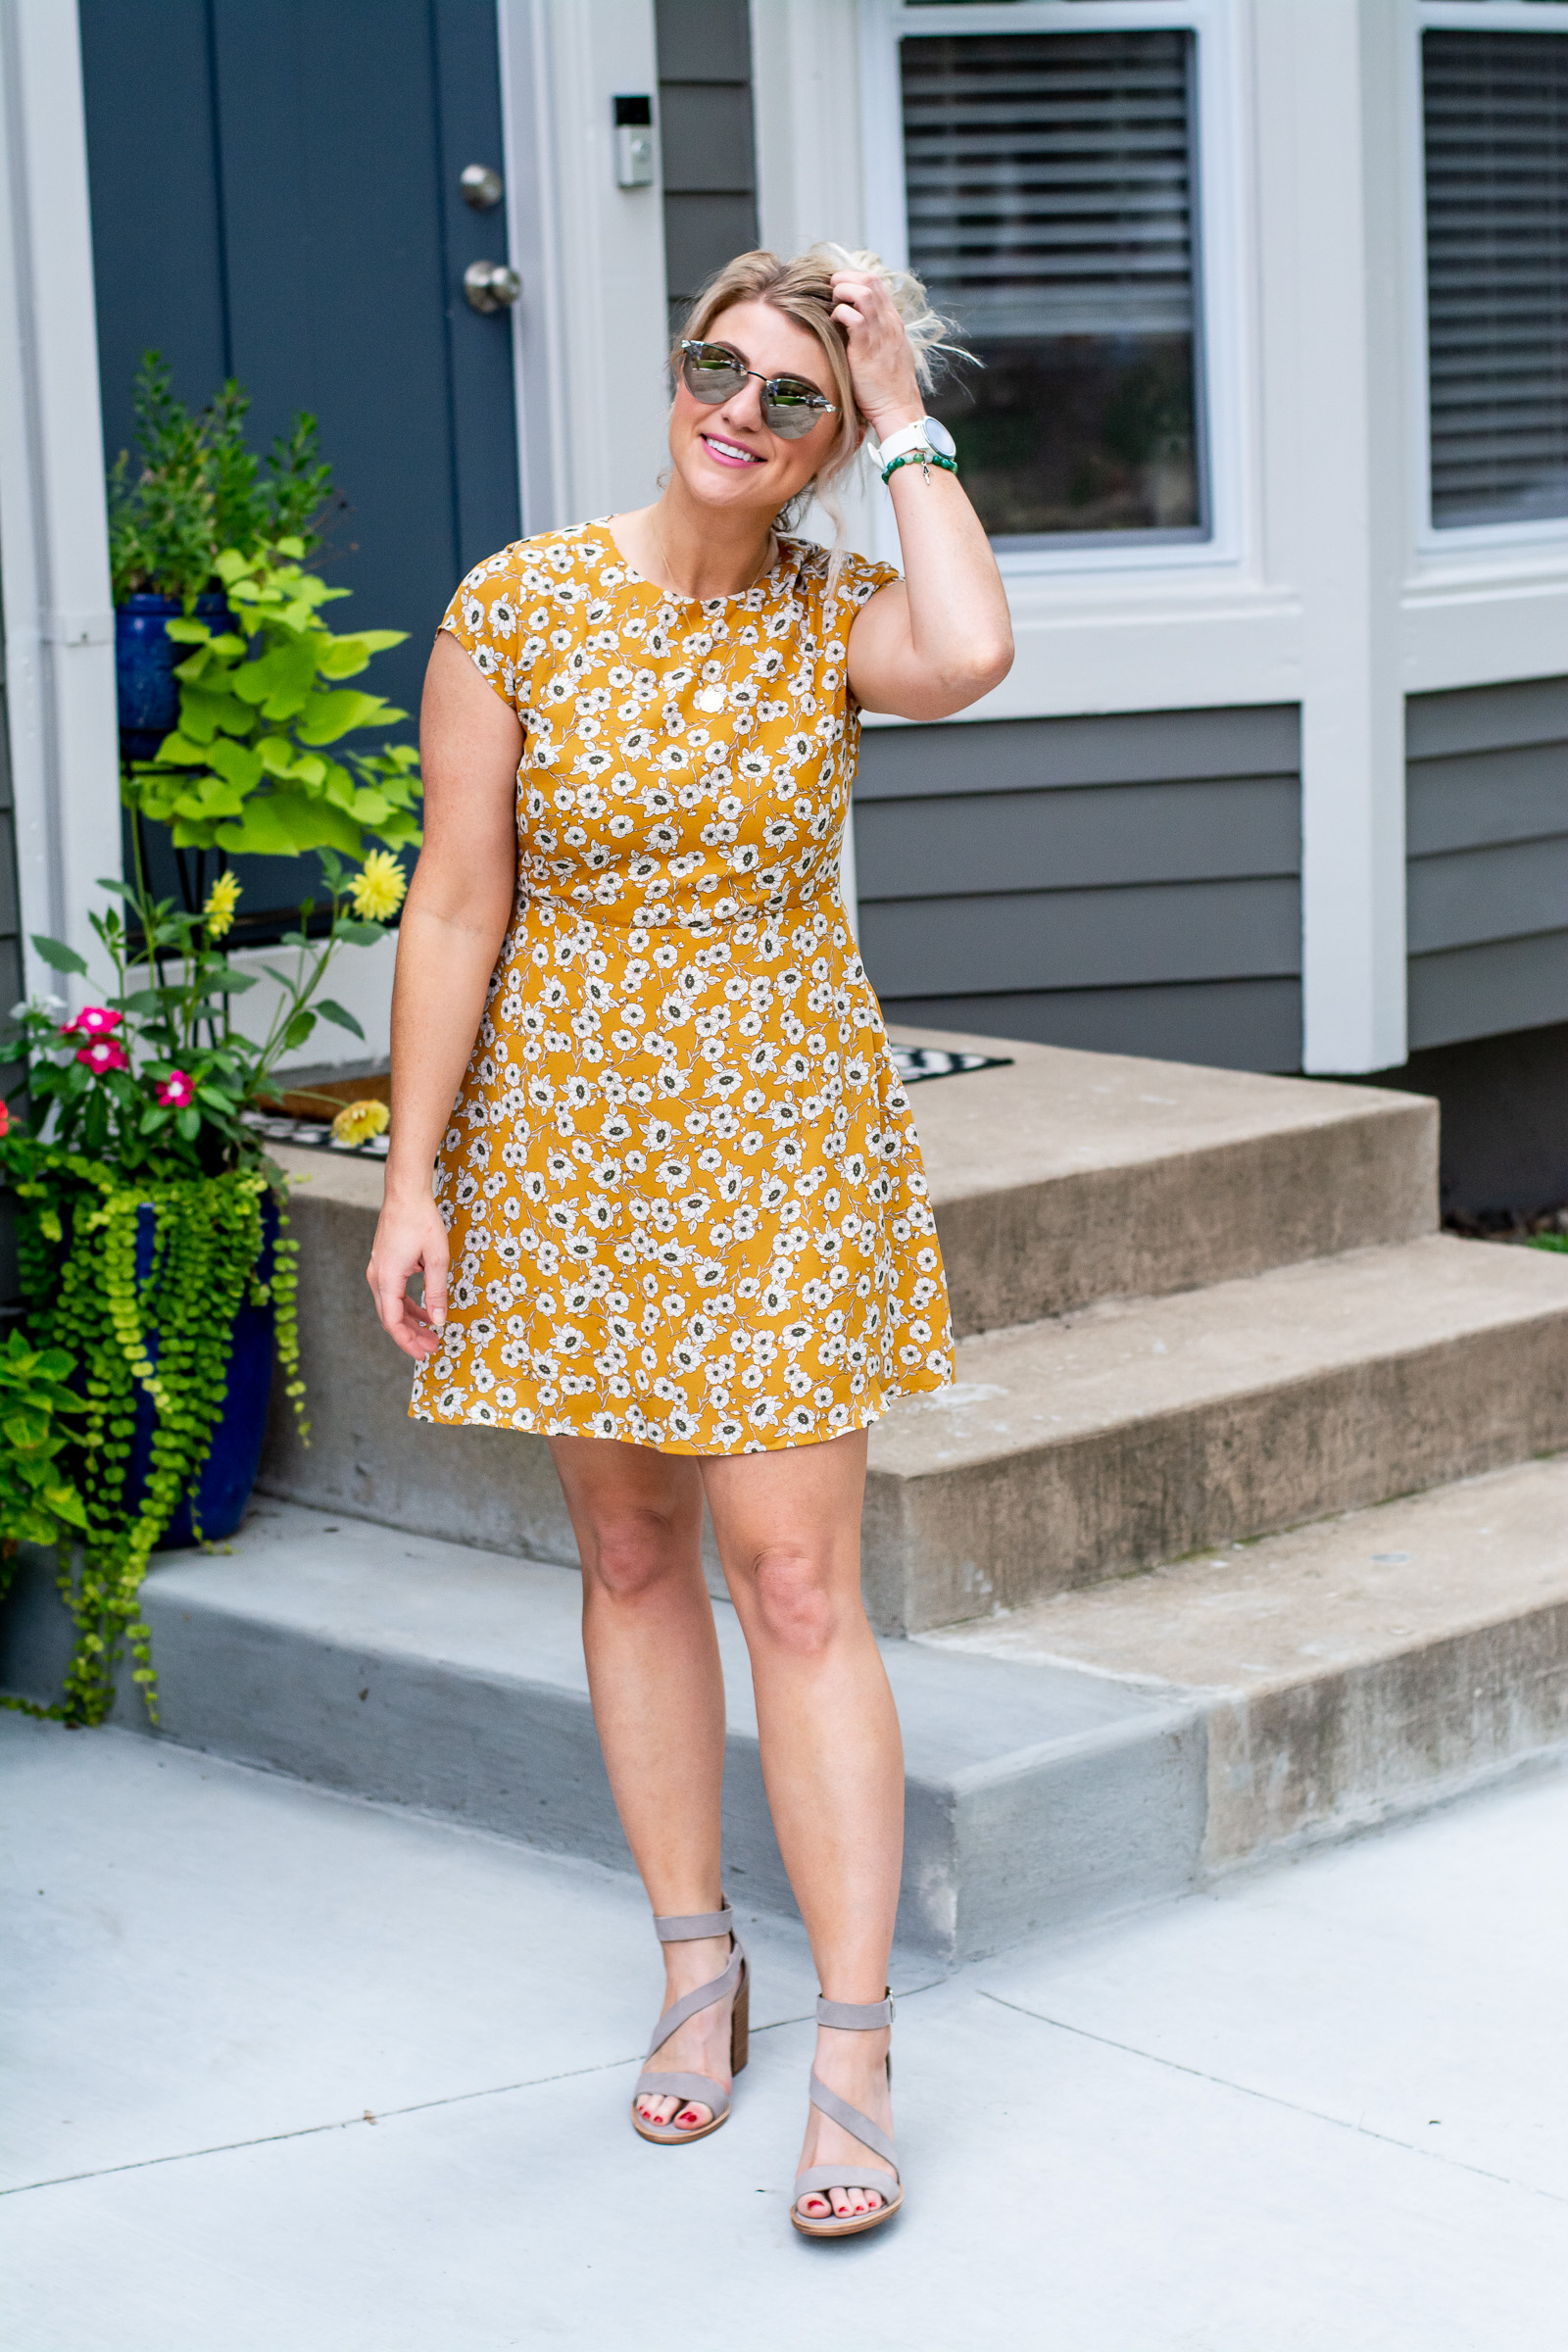 Mustard Floral Dress for Late Summer. | LSR